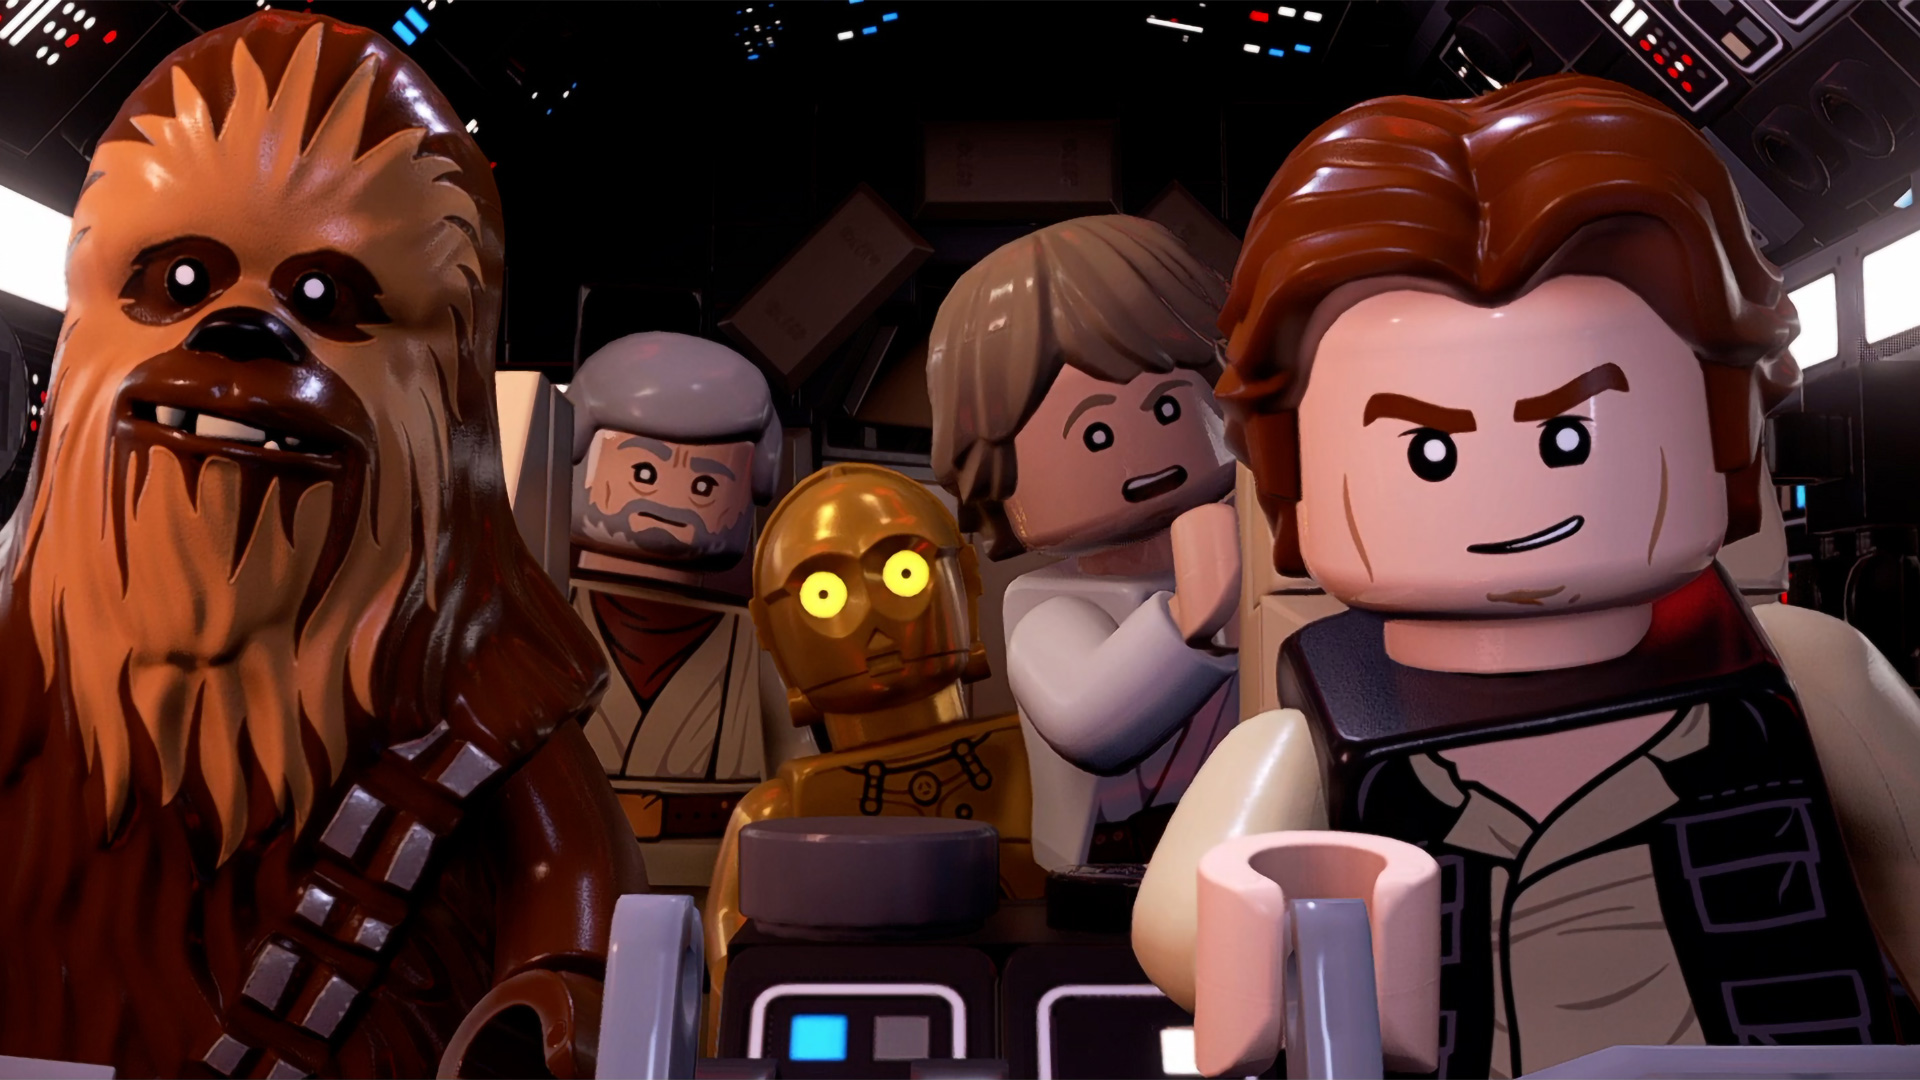 LEGO Star Wars: The Skywalker Saga gets a free update for Star Wars day